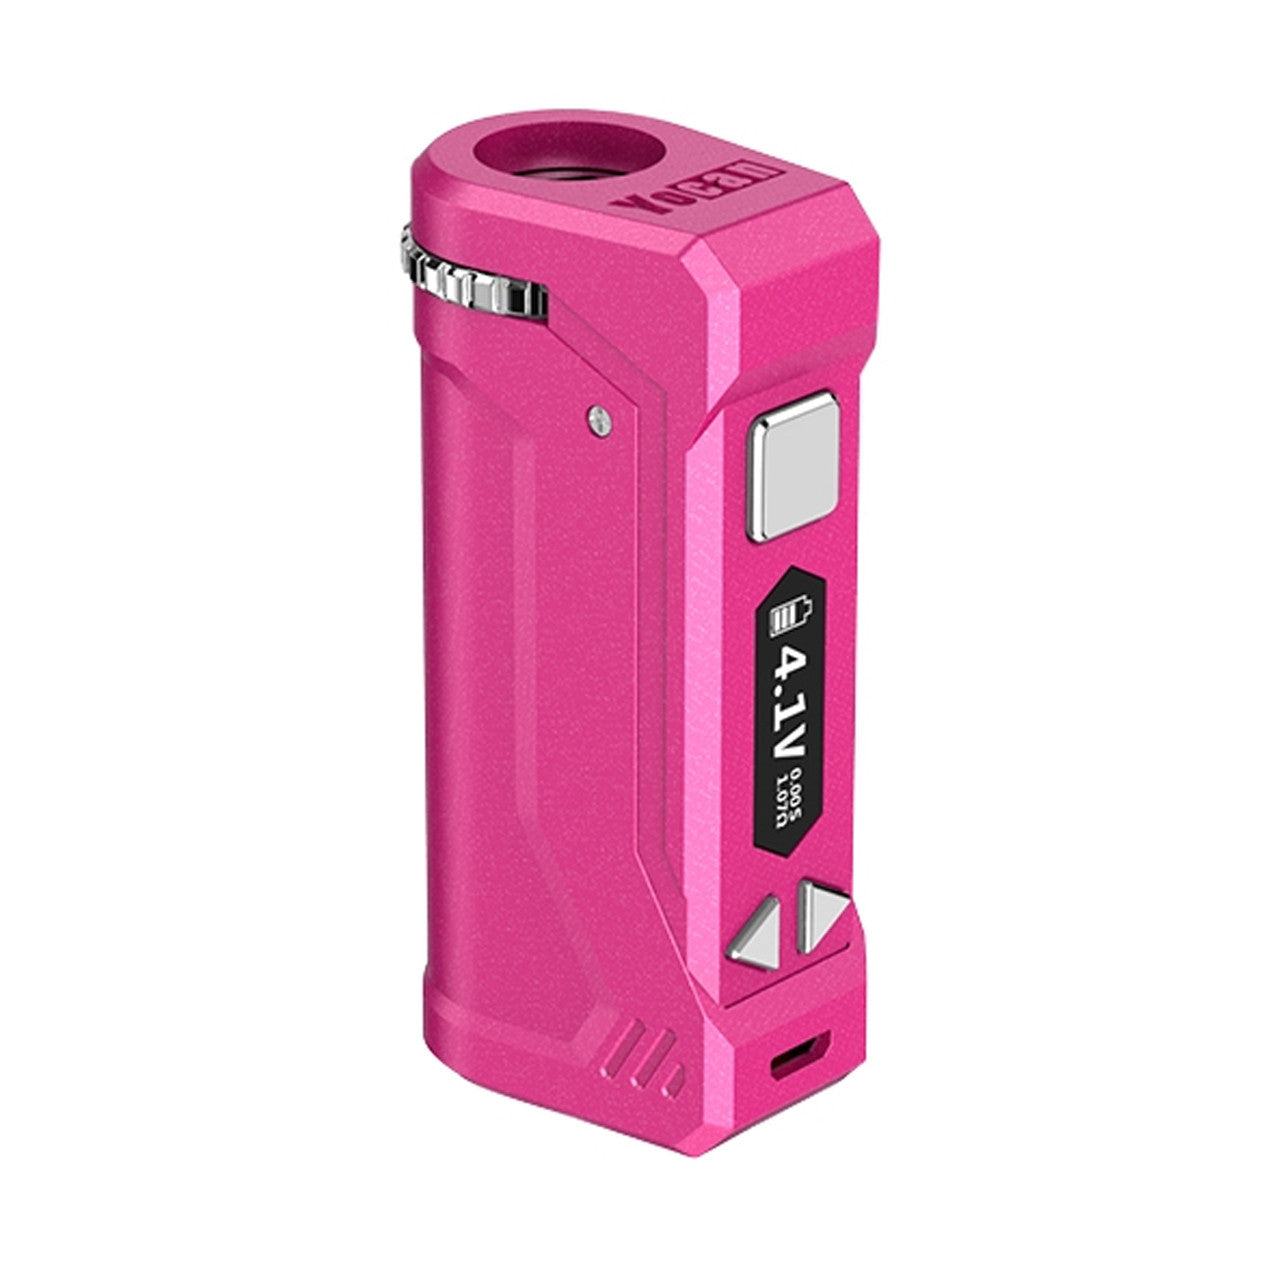 Yocan UNI Pro 650mAh Variable Voltage Carto Battery Mod - Rosy